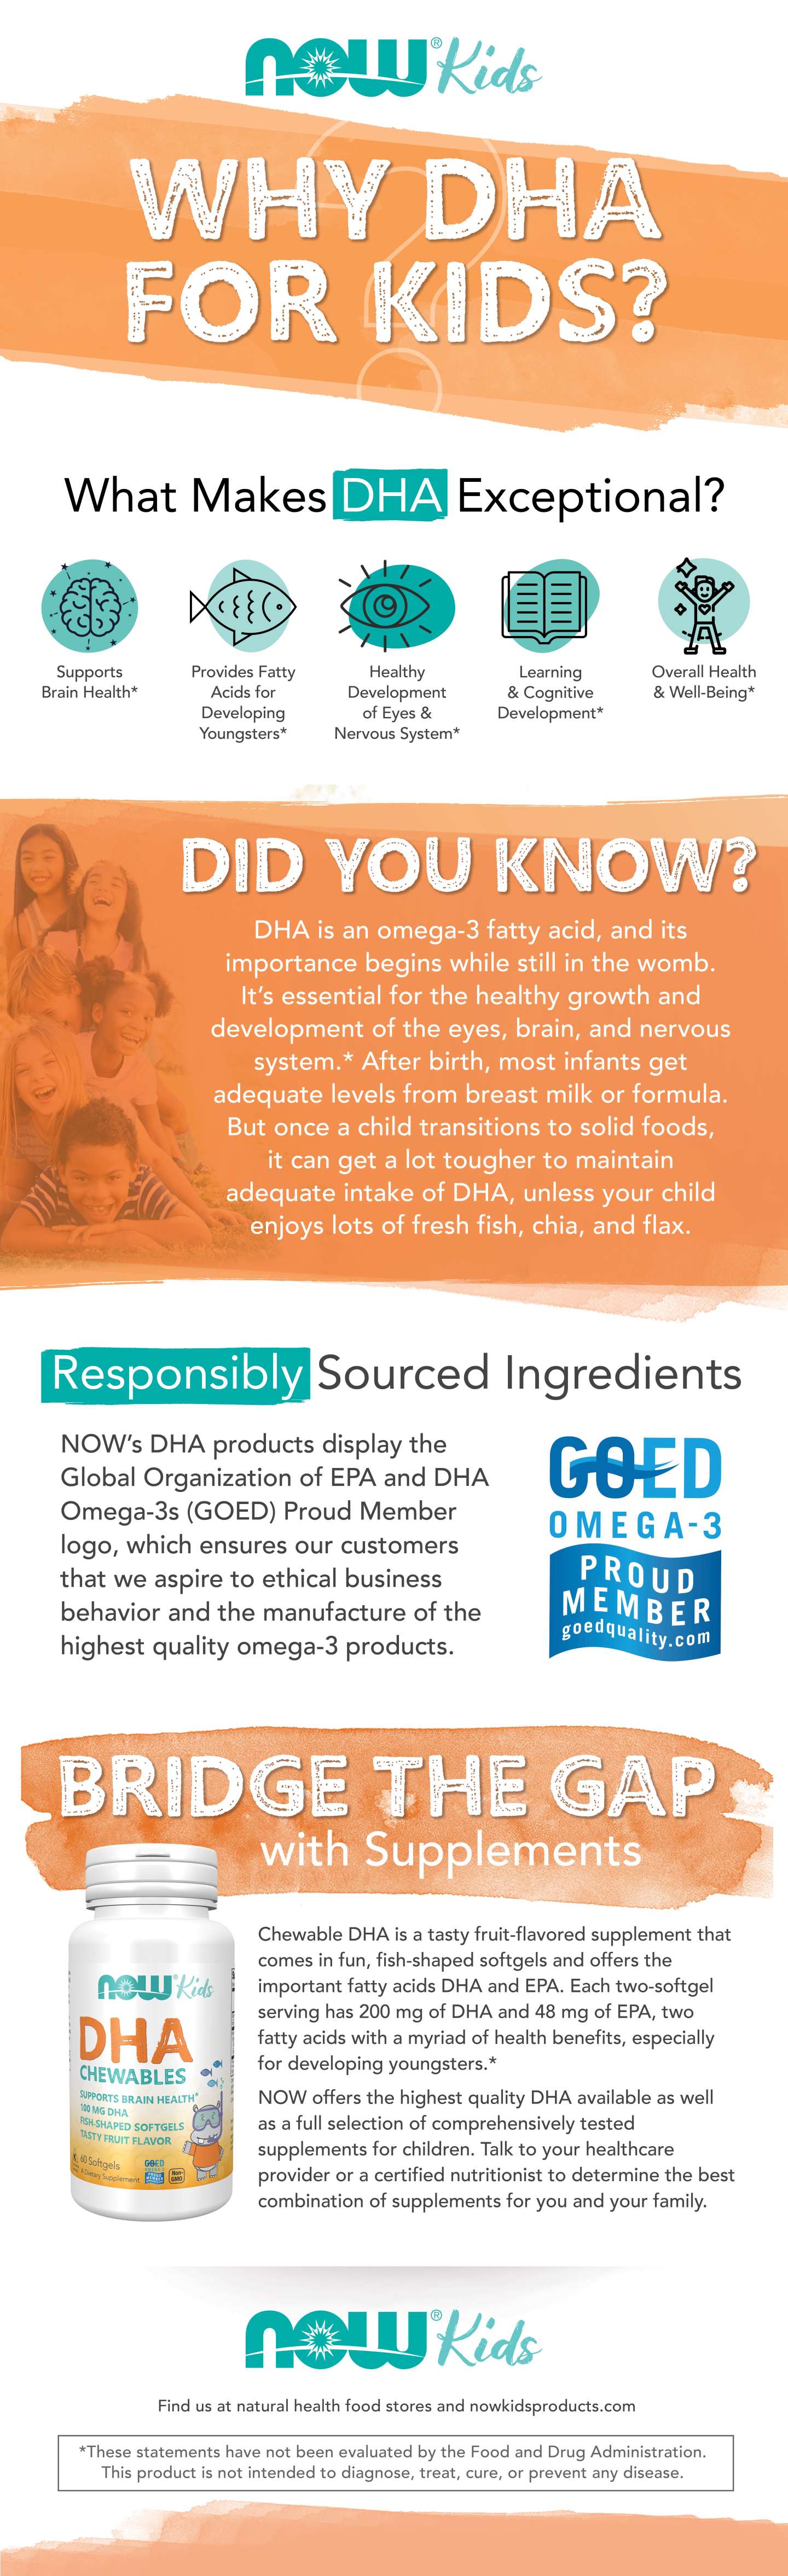 Infographic describing benefits of DHA for children